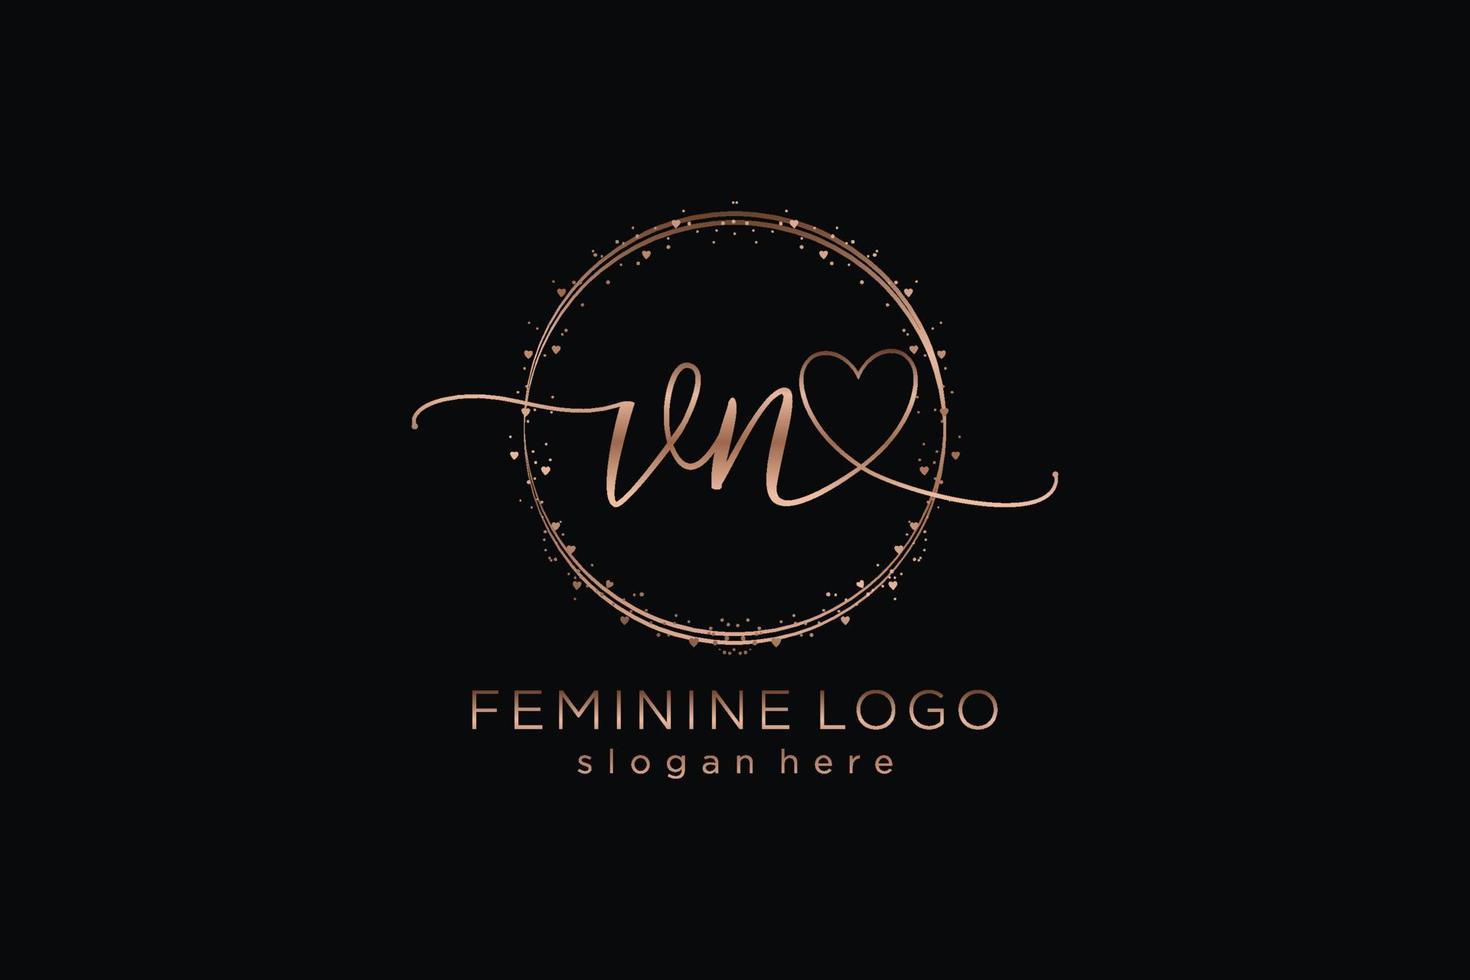 logotipo inicial de escritura a mano vn con plantilla de círculo logotipo vectorial de boda inicial, moda, floral y botánica con plantilla creativa. vector